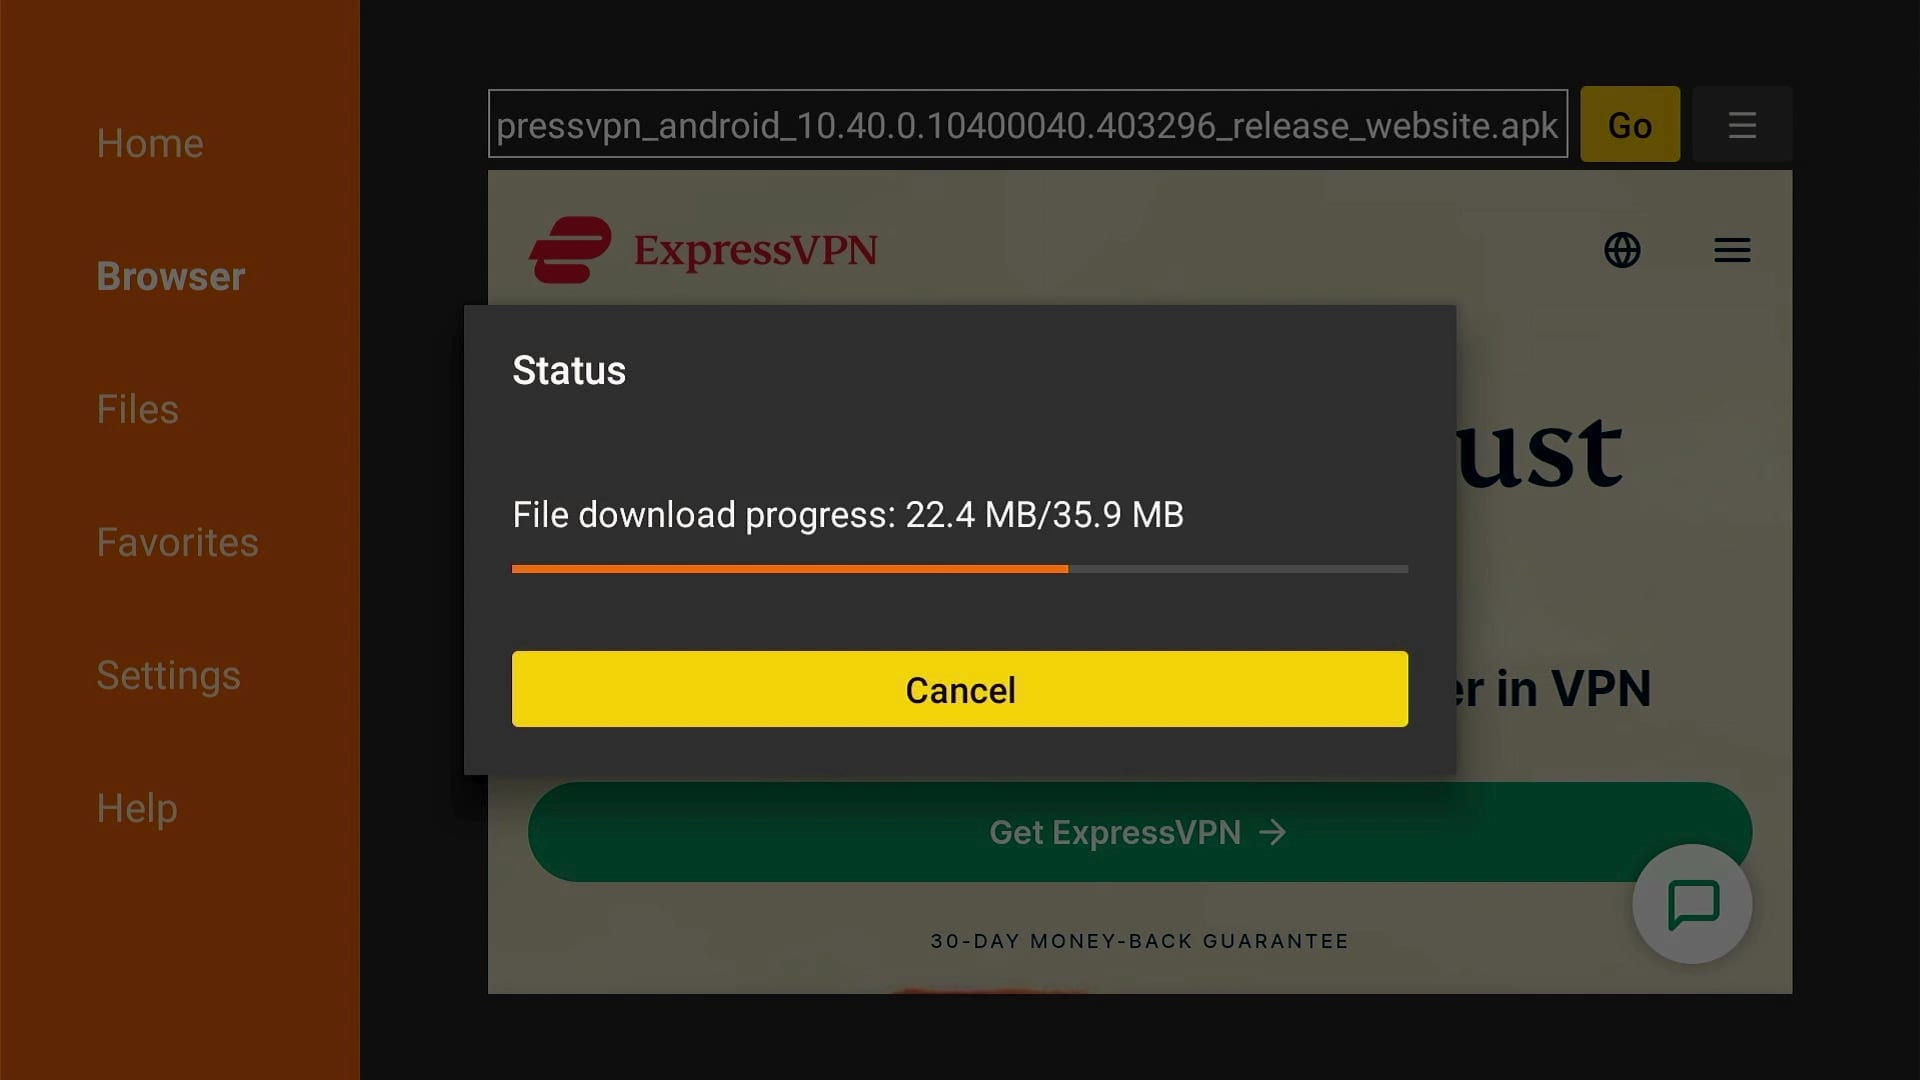 Installing the ExpressVPN .apk on Fire TV